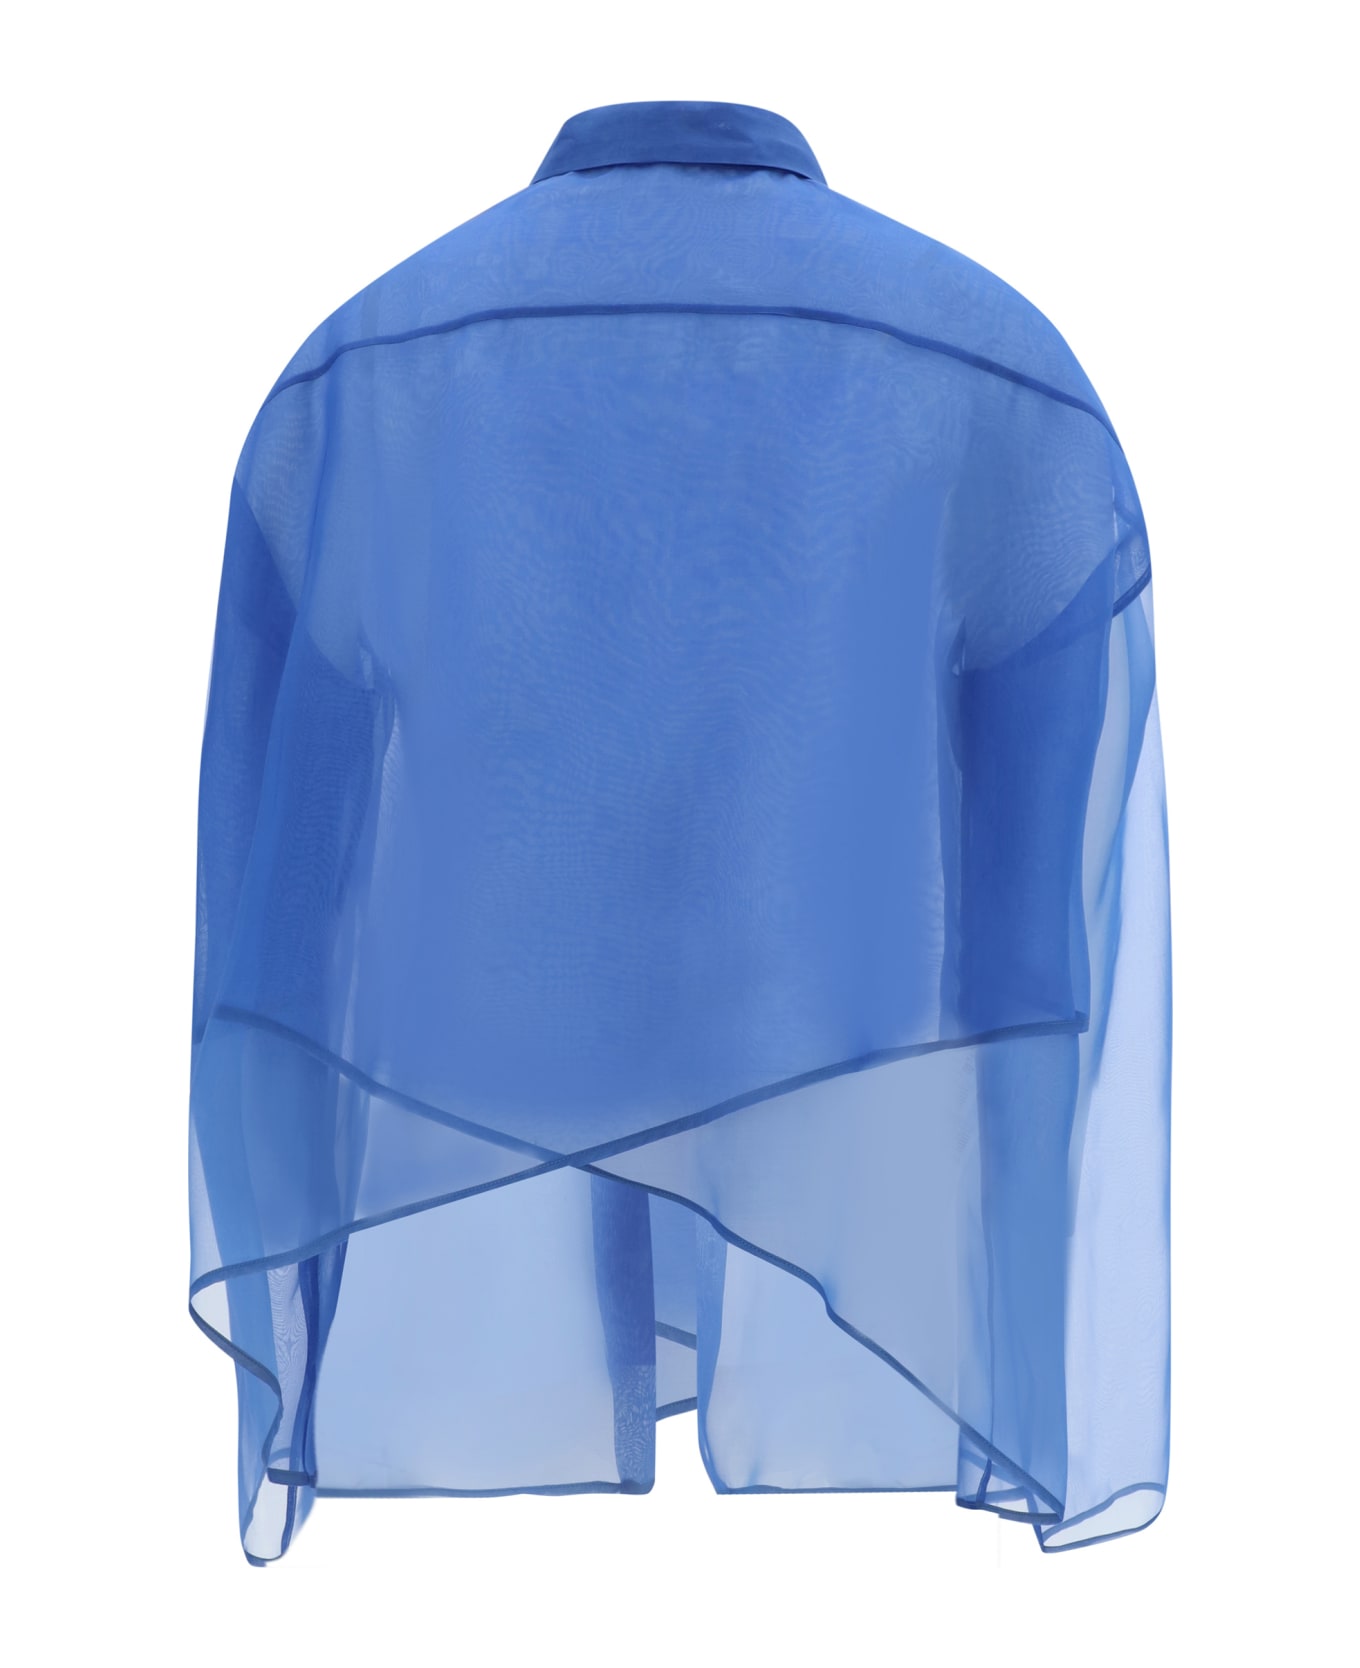 Giorgio Armani Shirt - Deep Ultramarine